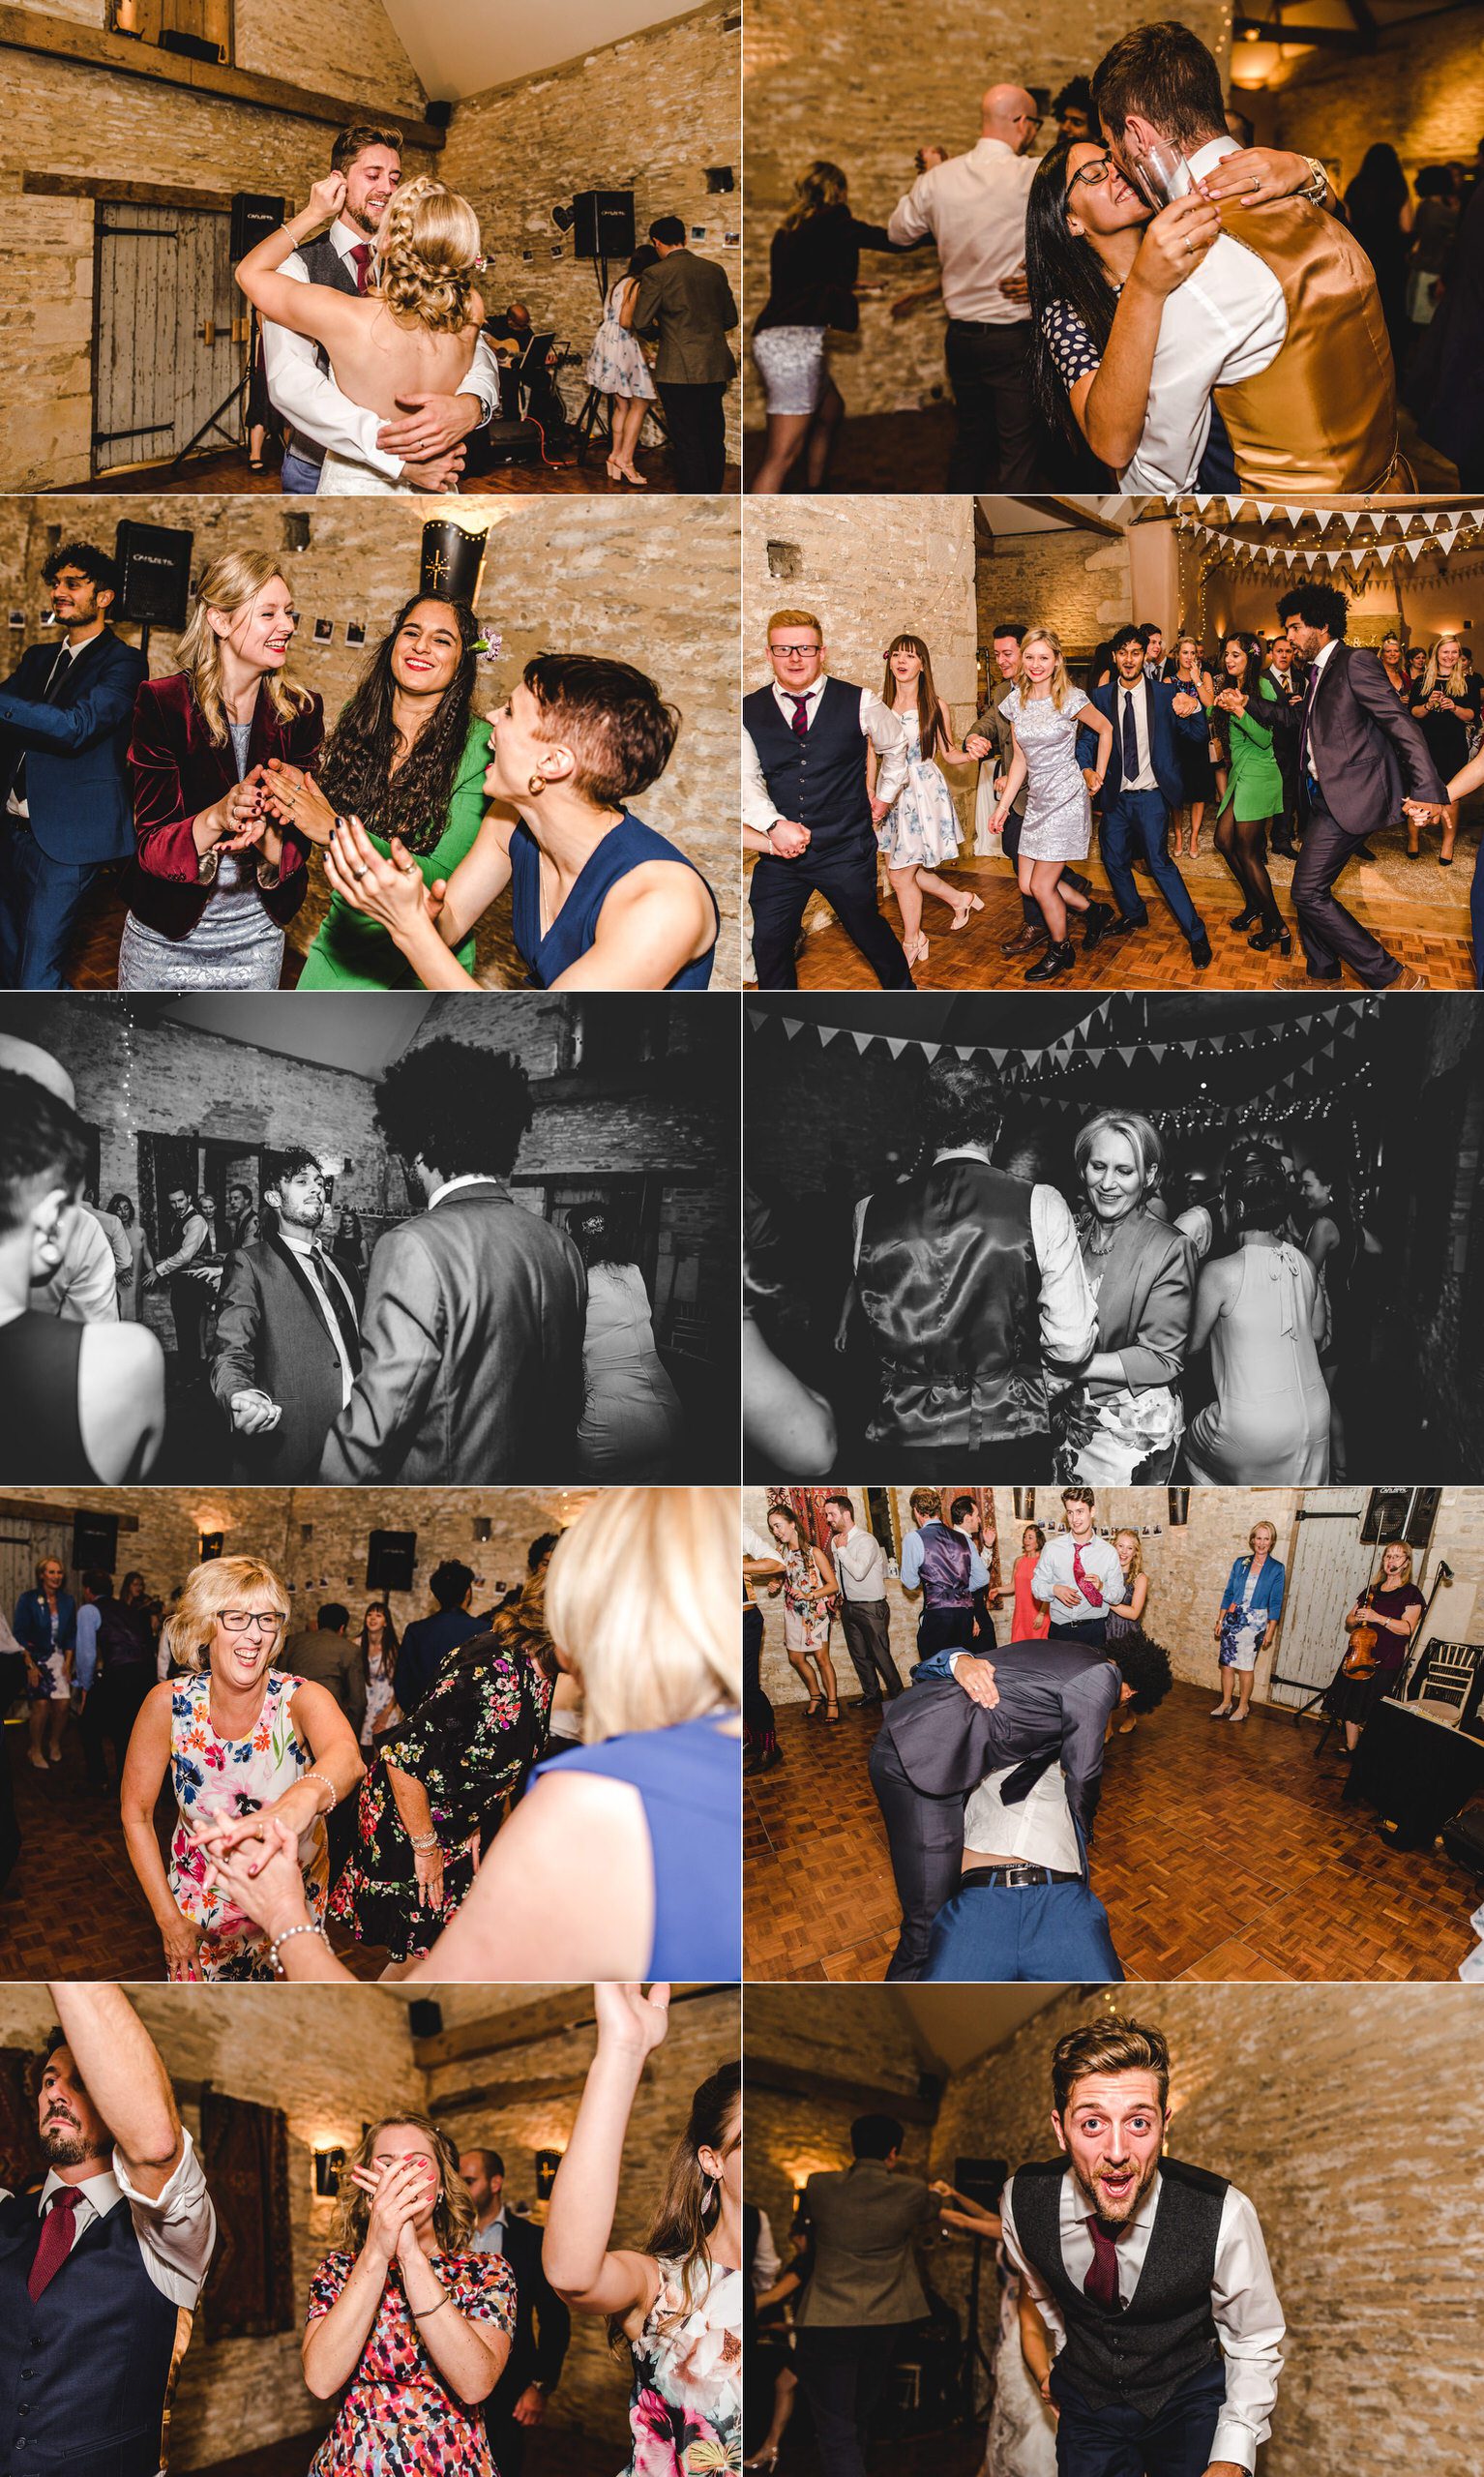 Wedding guests dancingat Oxleaze Barn